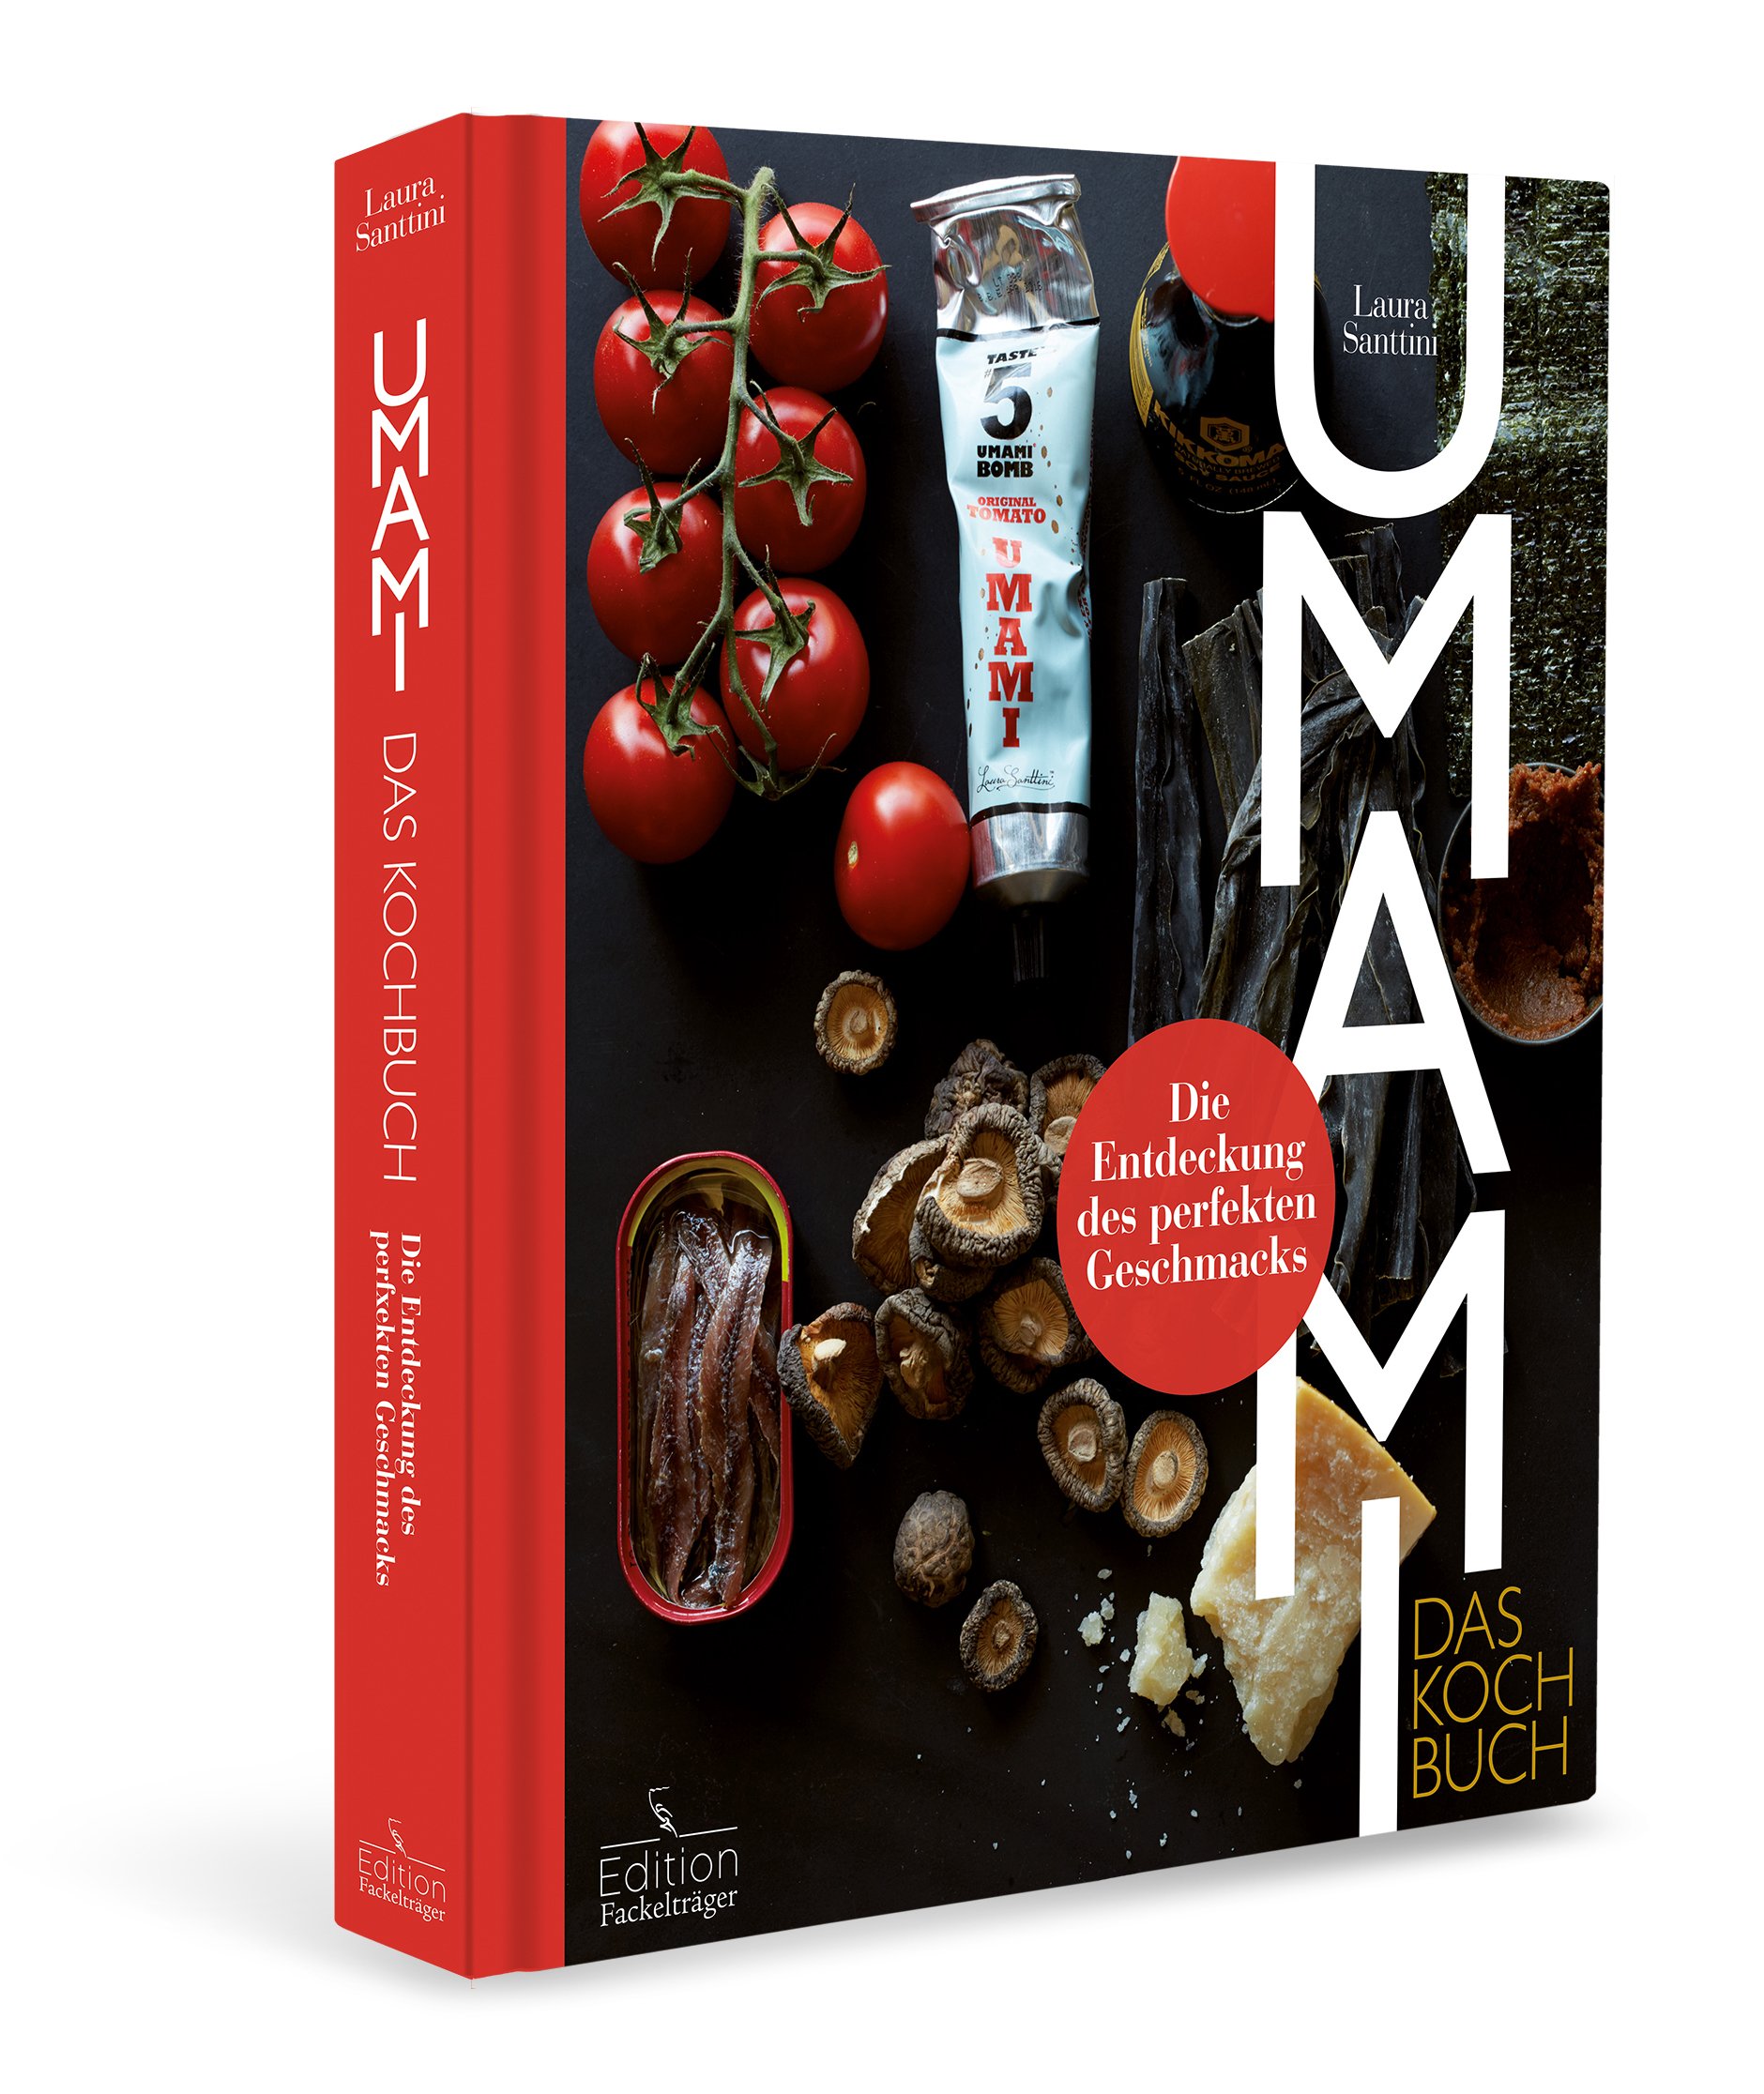 Umami - Das Kochbuch